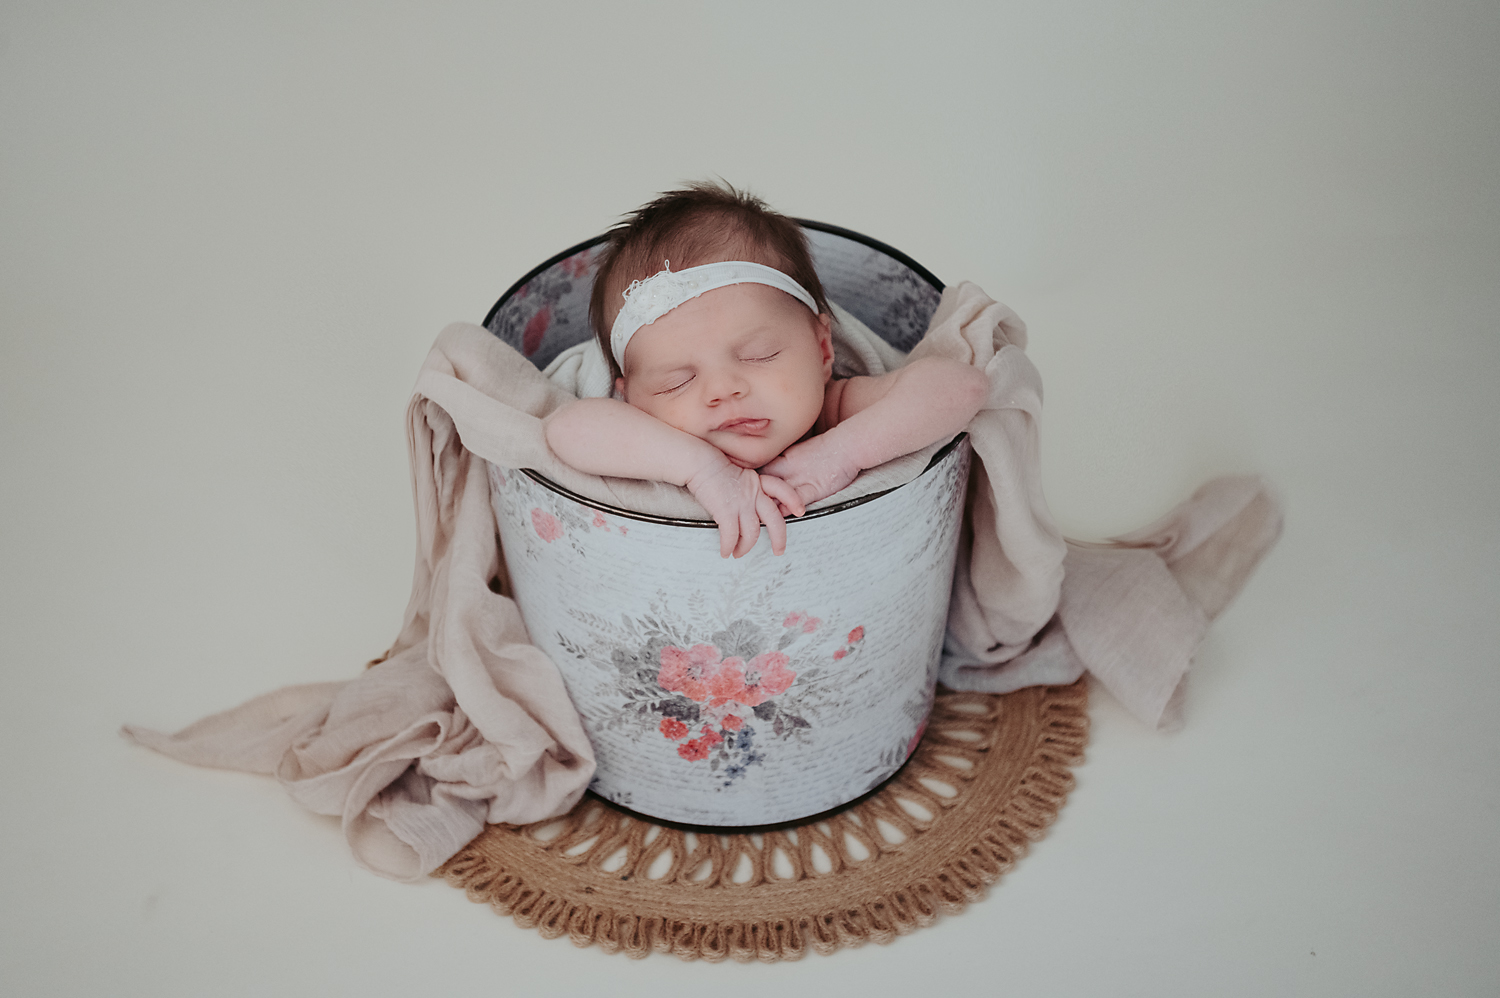 Newborn photography at Lisa Rowland's Studio at Perfect-Photos.com